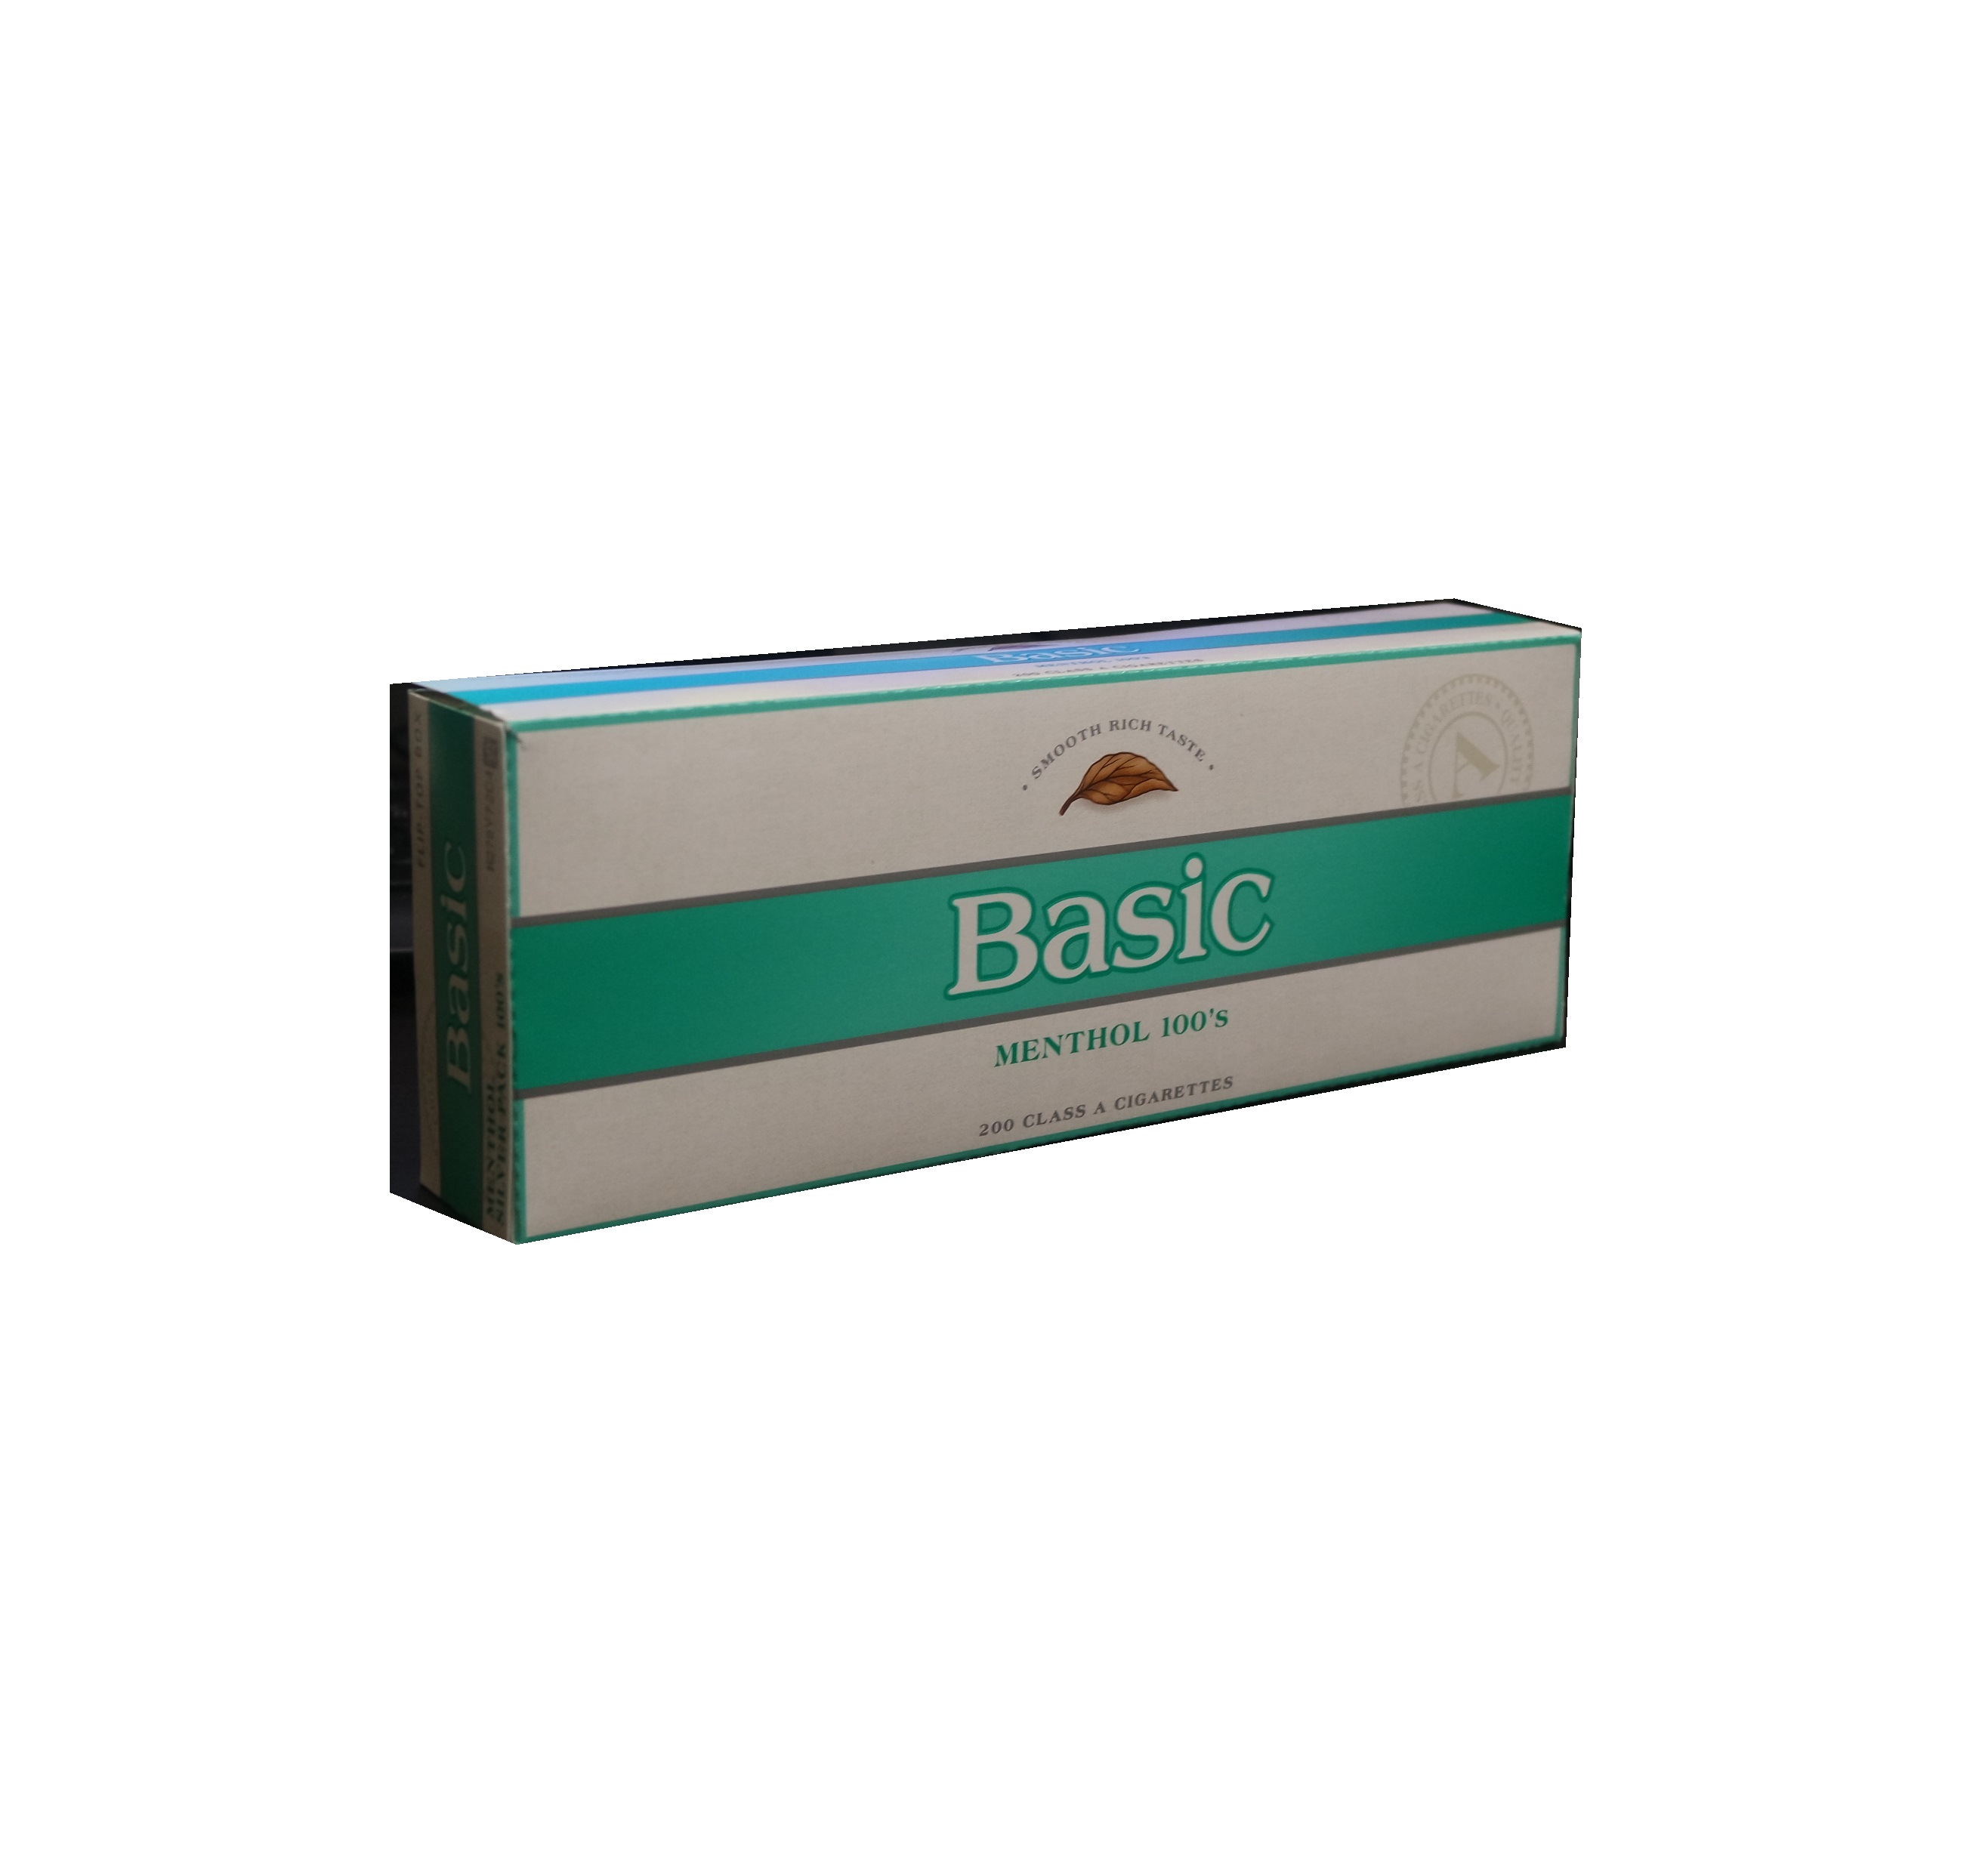 Basic menthol silver 100 box